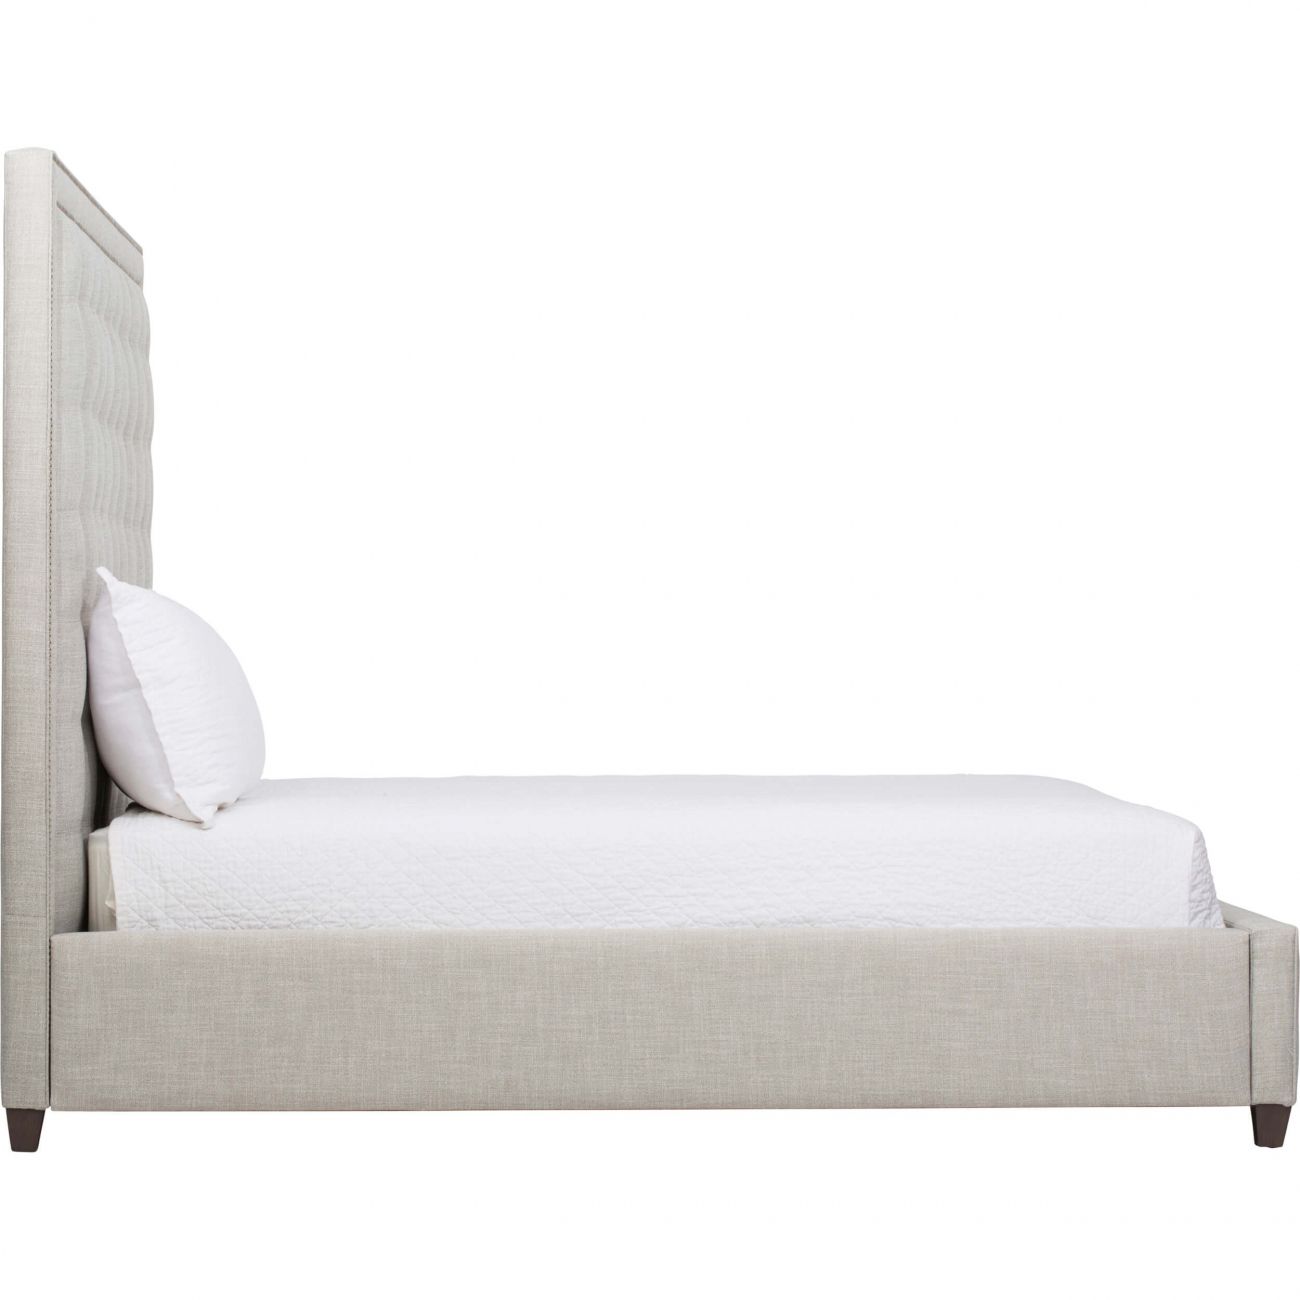 Double bed with upholstered headboard 160x200 cm beige Dakota